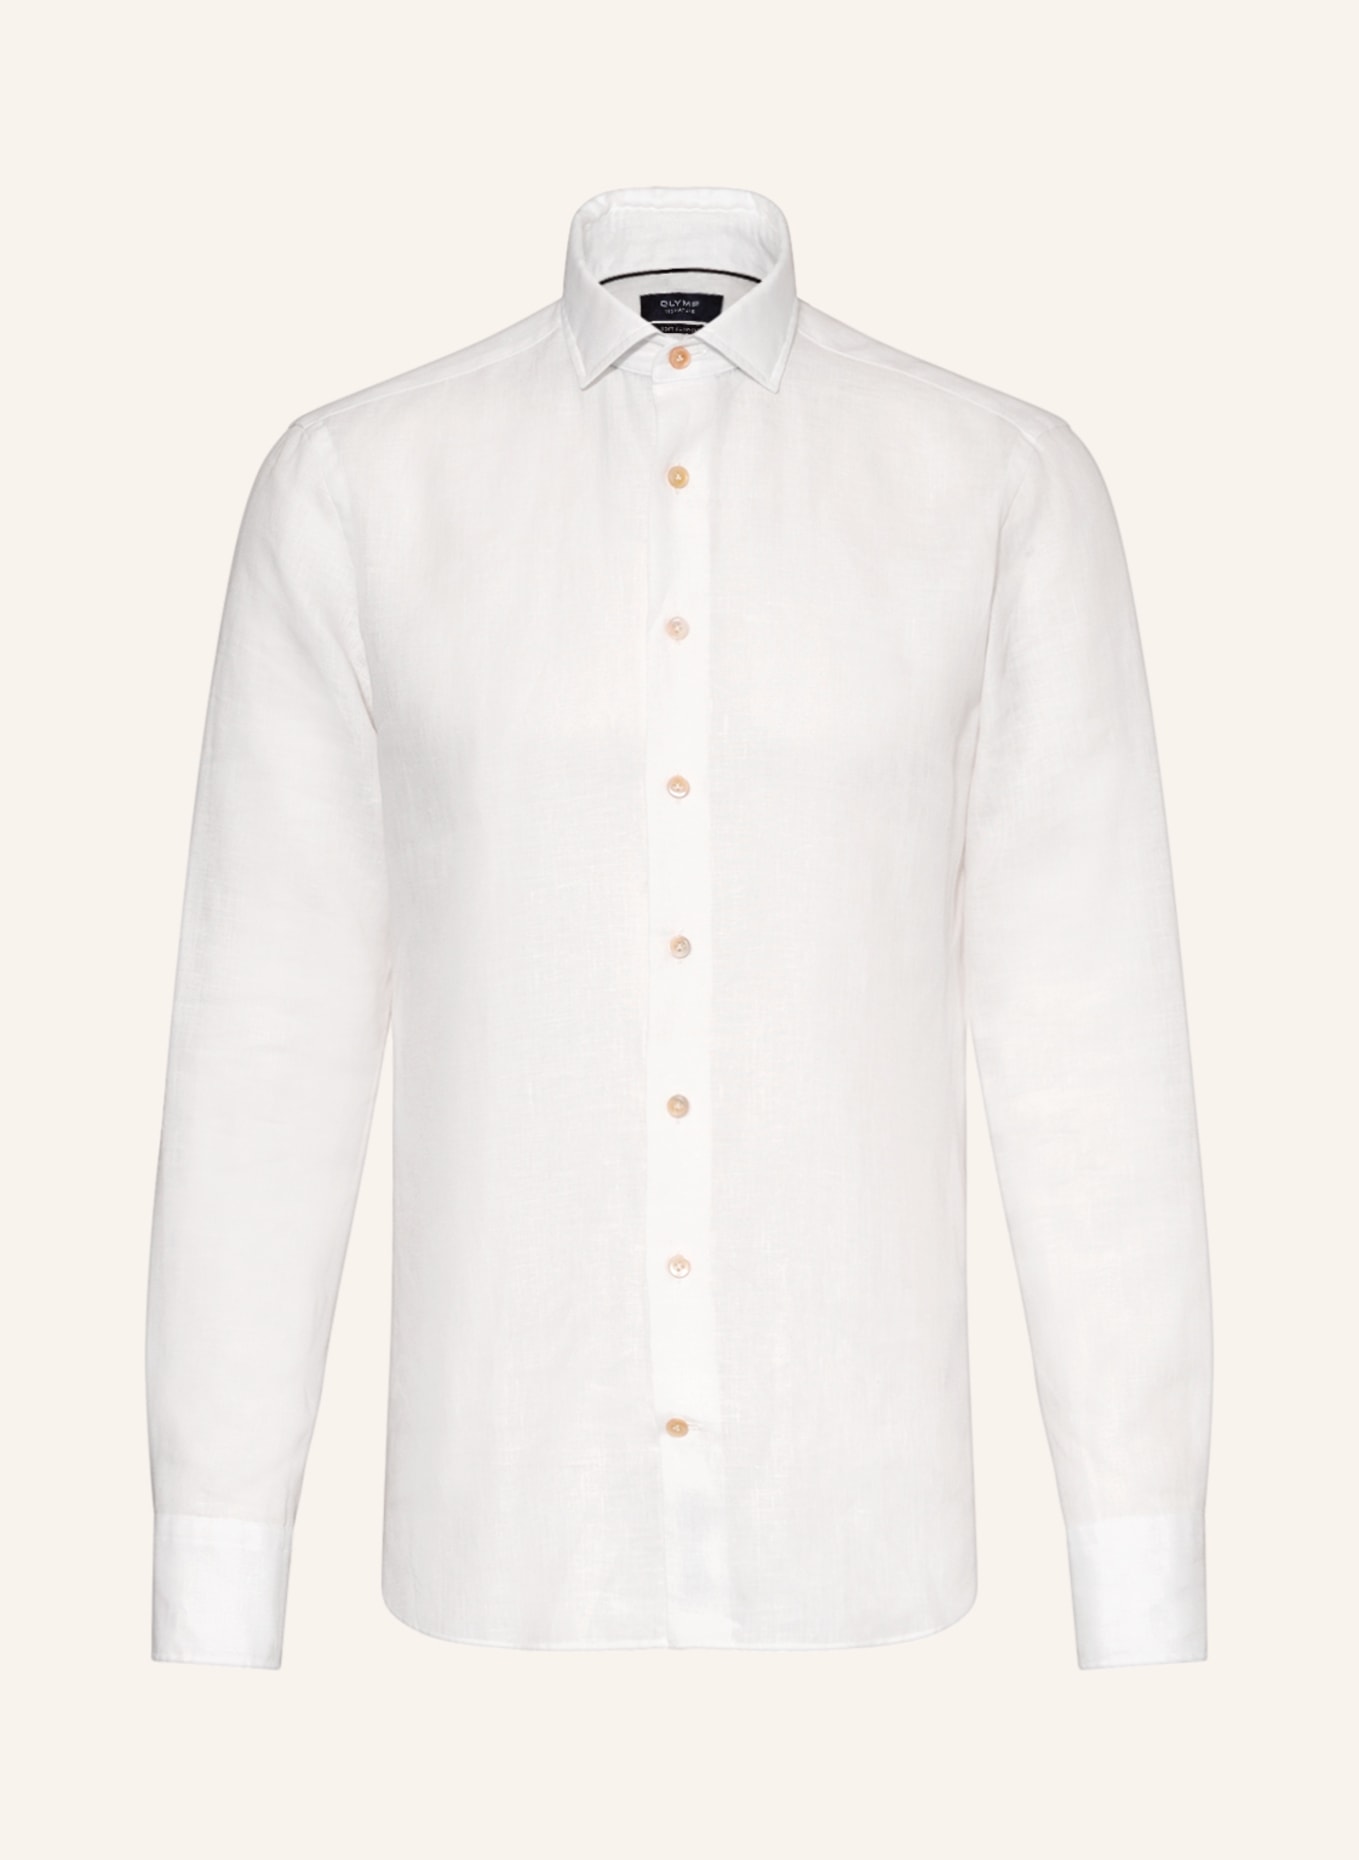 OLYMP SIGNATURE Leinenhemd tailored fit, Farbe: WEISS (Bild 1)